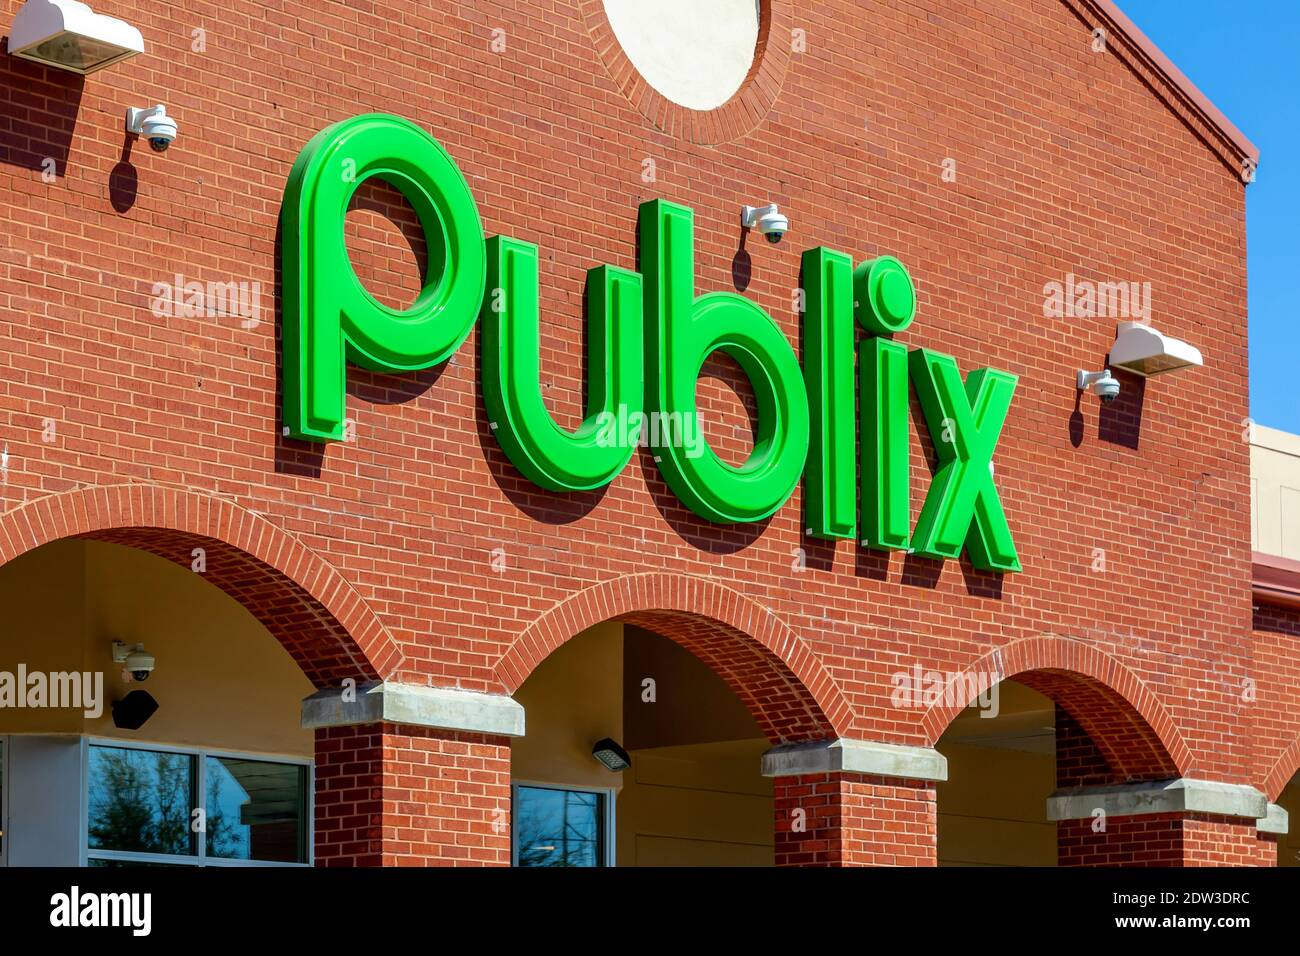 Charleston, South Carolina, USA - February 28, 2020: Close up of Publix Supermarkets sign. Stock Photo